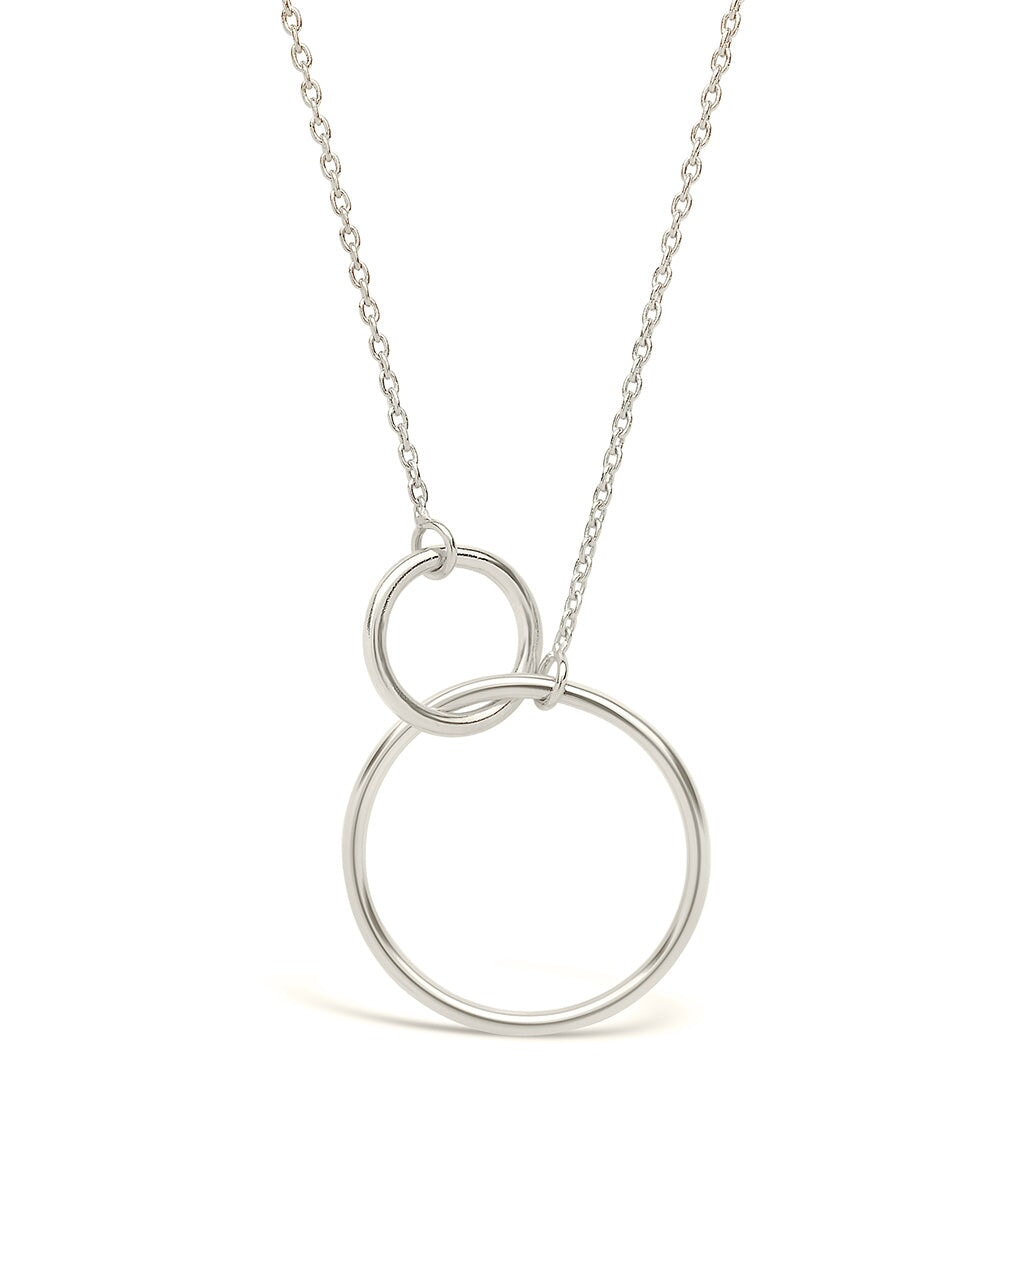 Adornia, Interlocking Ring Pendant Necklace, Sterling Silver, New in box  $75 | eBay